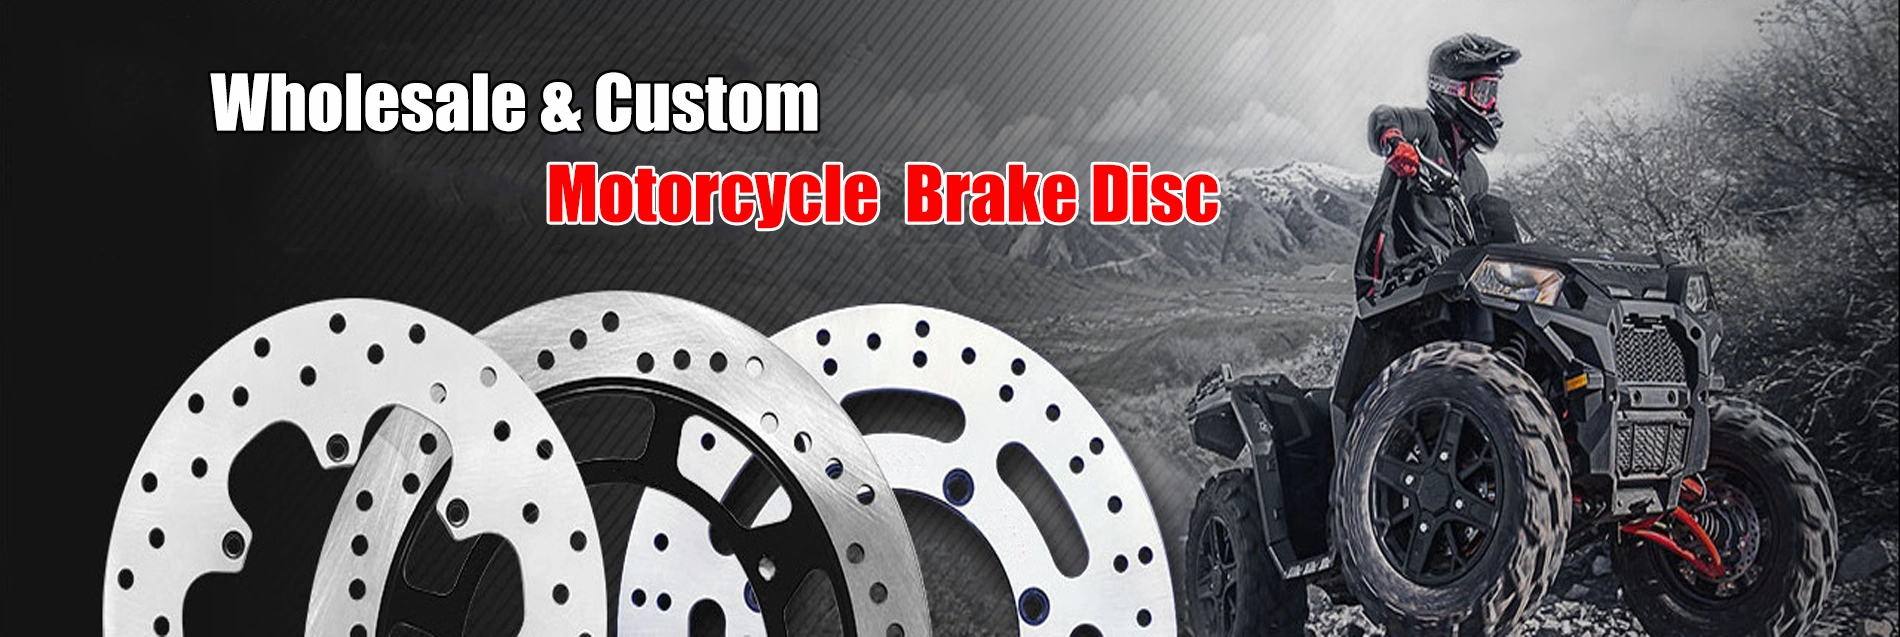 Custom 310mm motorcycle front brake disc for Suzuki